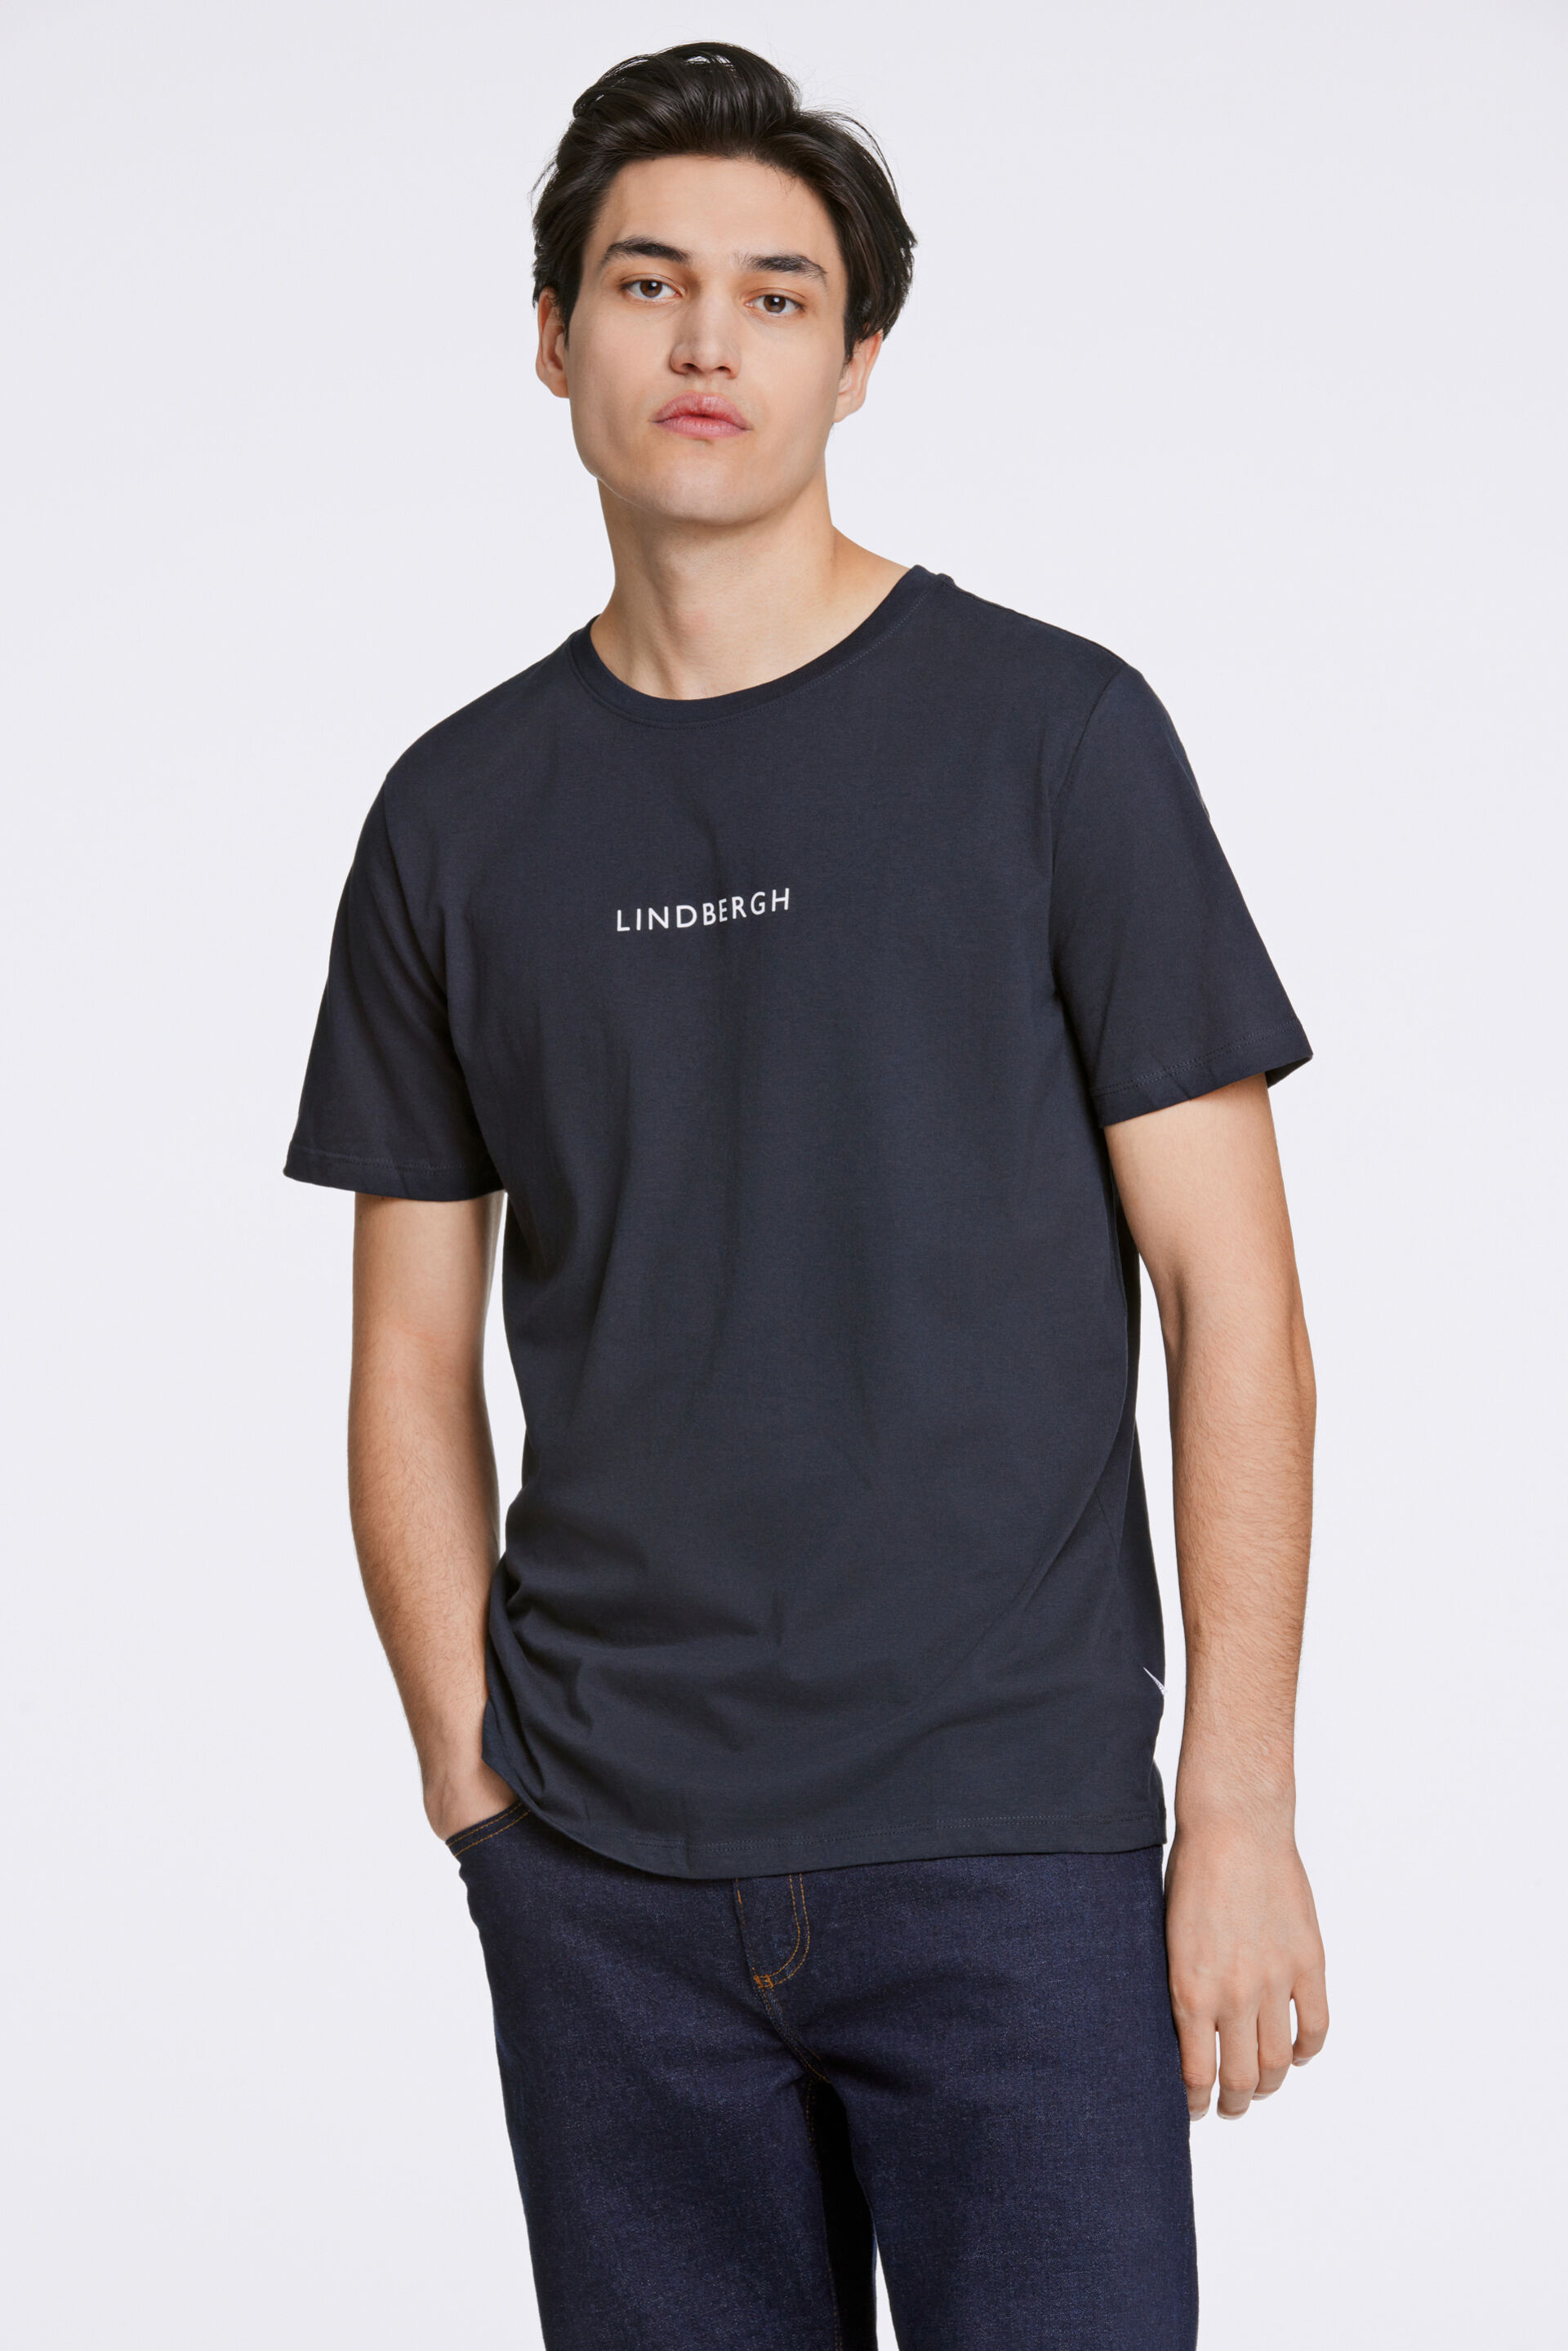 Lindbergh  T-shirt 30-400200B